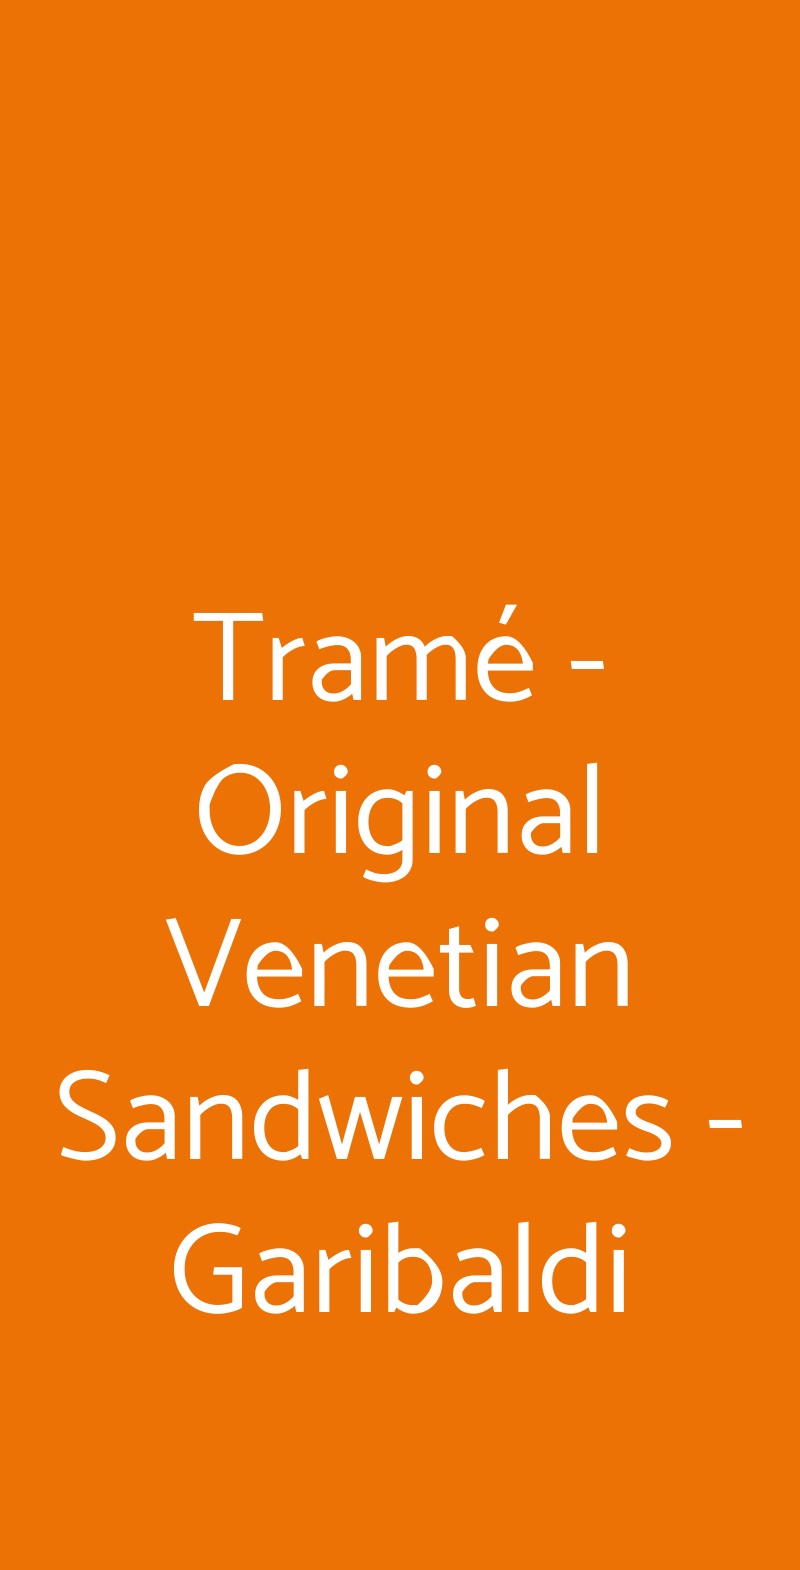 Tramé - Original Venetian Sandwiches - Garibaldi Milano menù 1 pagina